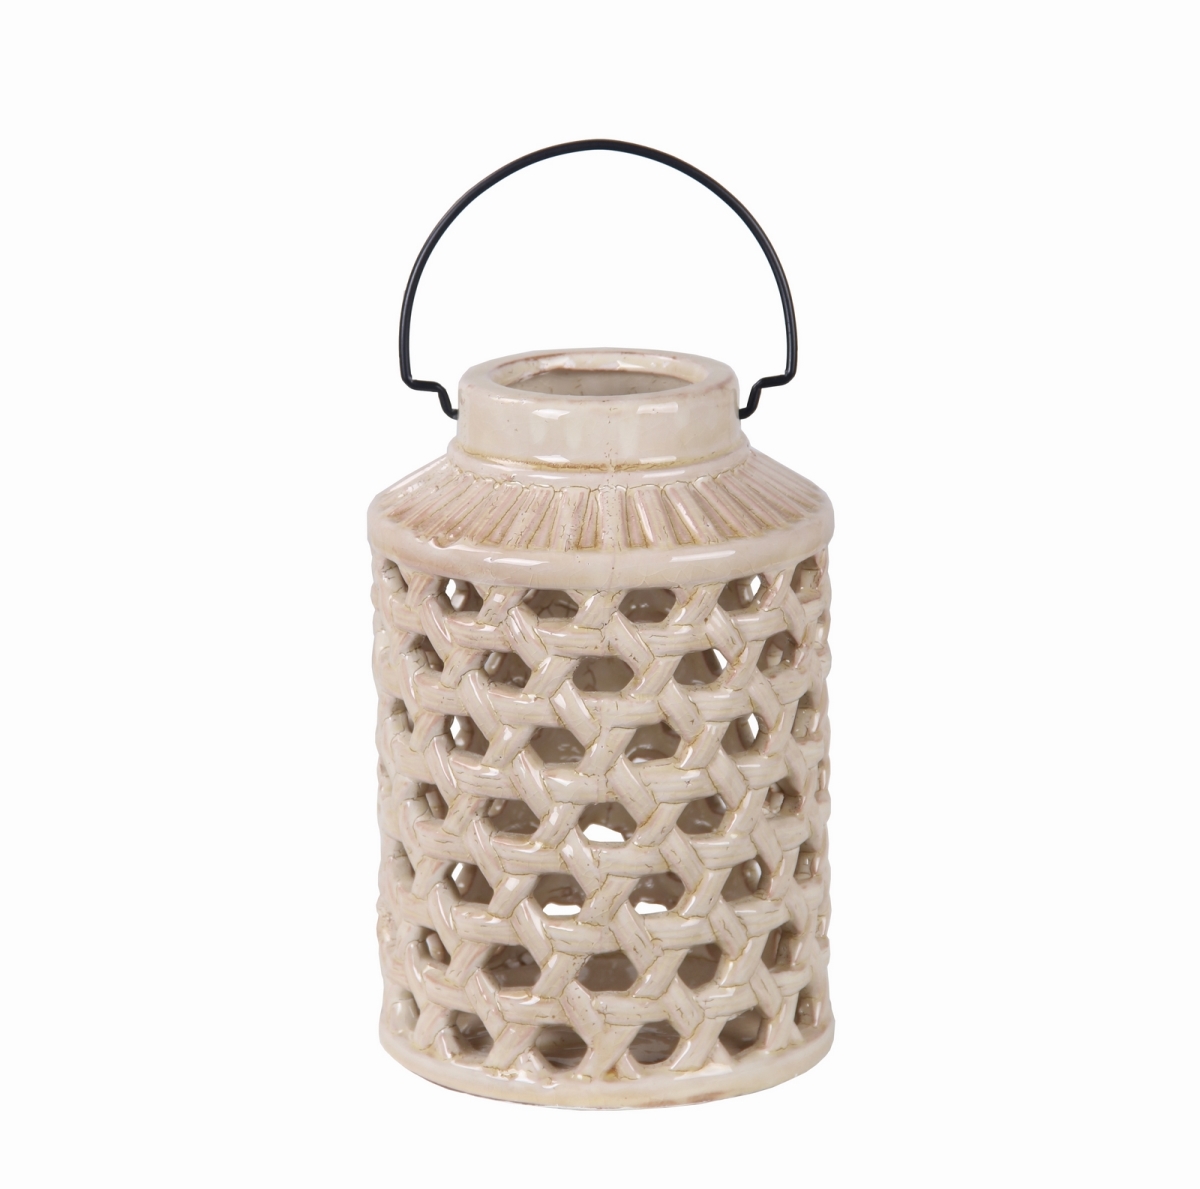 66775 7 X 7 X 10.5 In. Pierced Ceramic Lantern, Off-white - Small